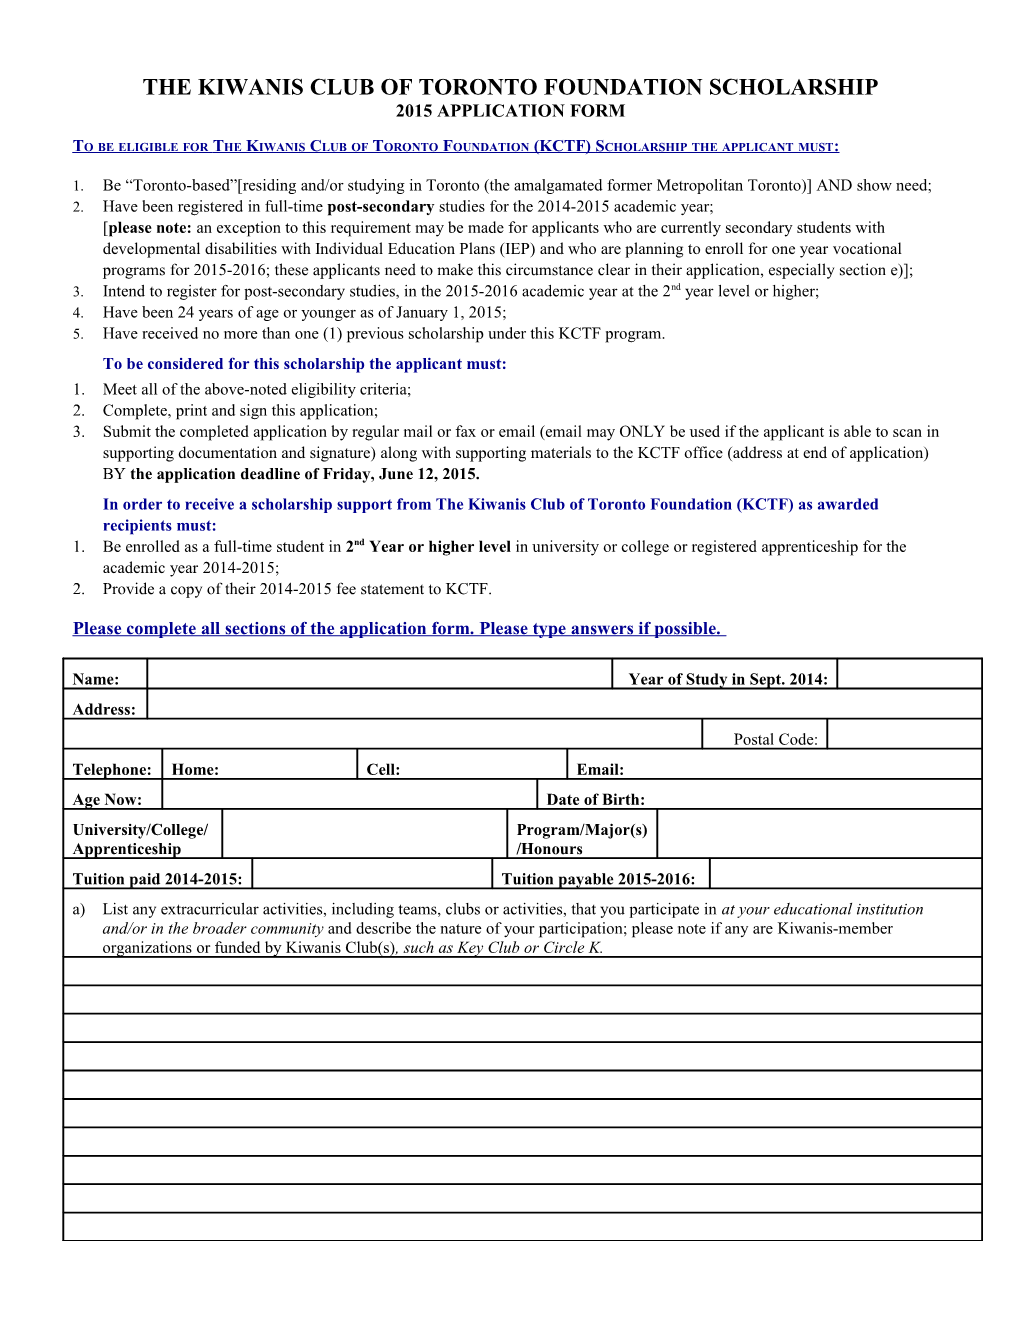 The Kiwanis Club of Toronto Foundation Scholarship 2015 Application Form